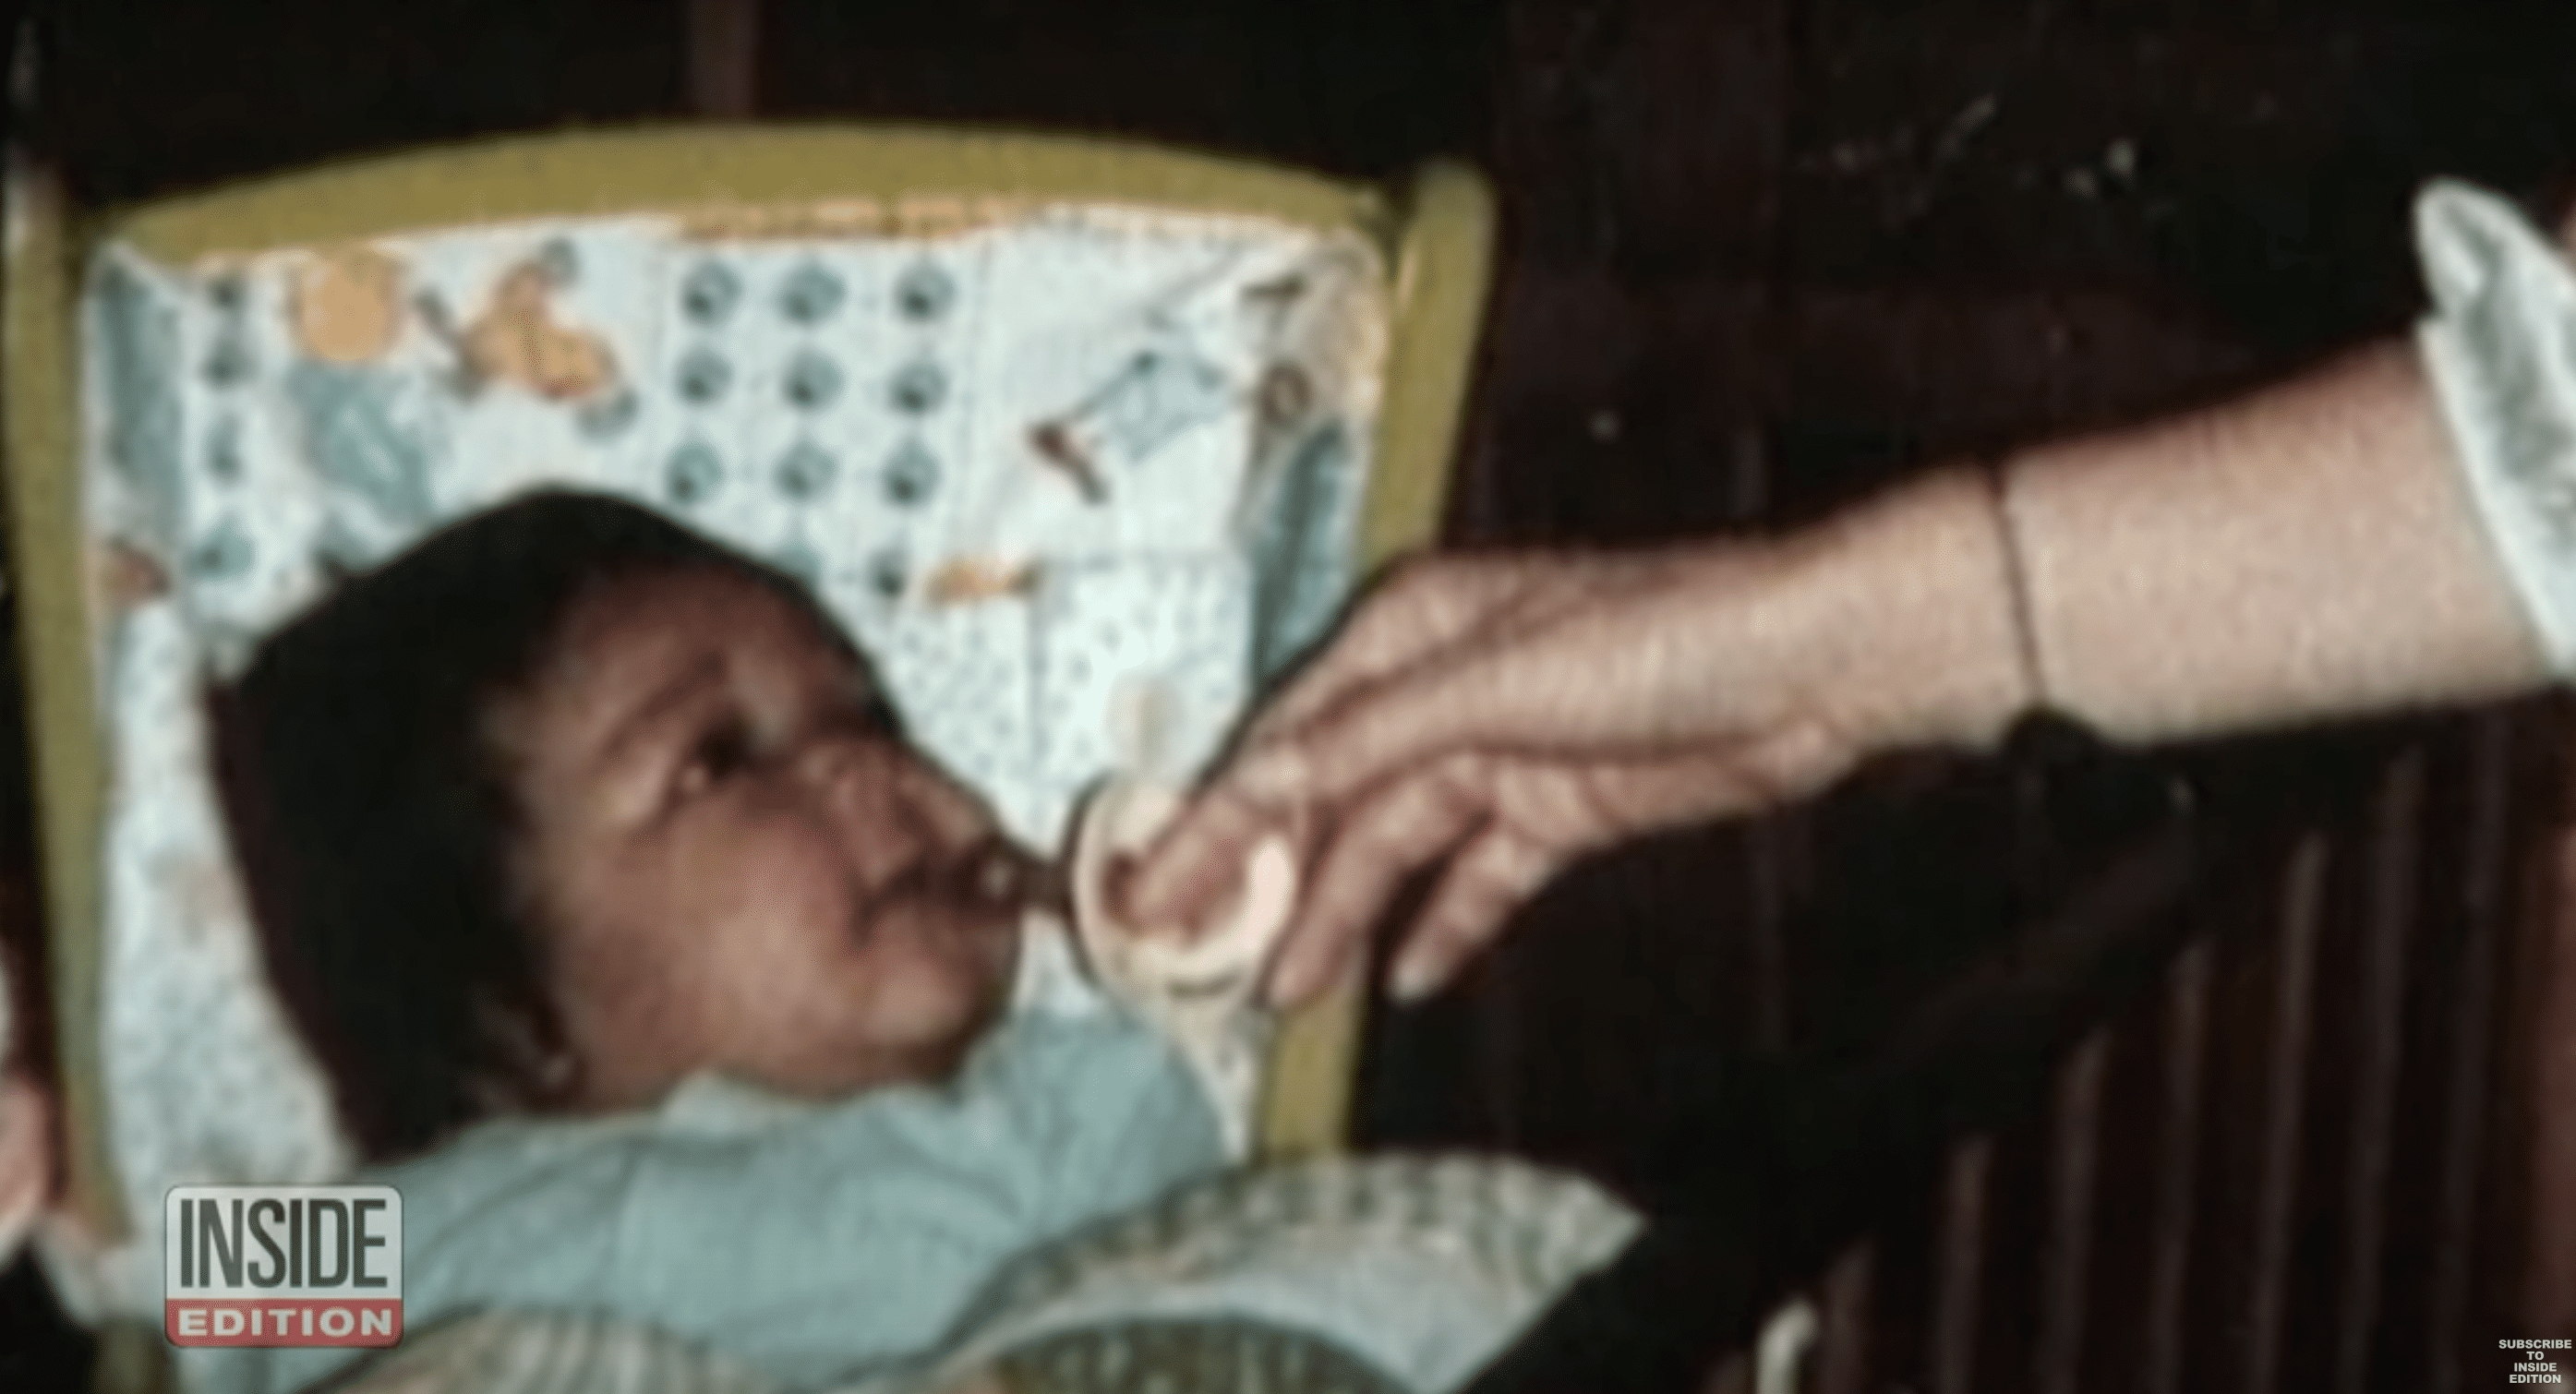 Elizabeth Muto Hunterton as a baby. | Source: YouTube.com/Inside Edition